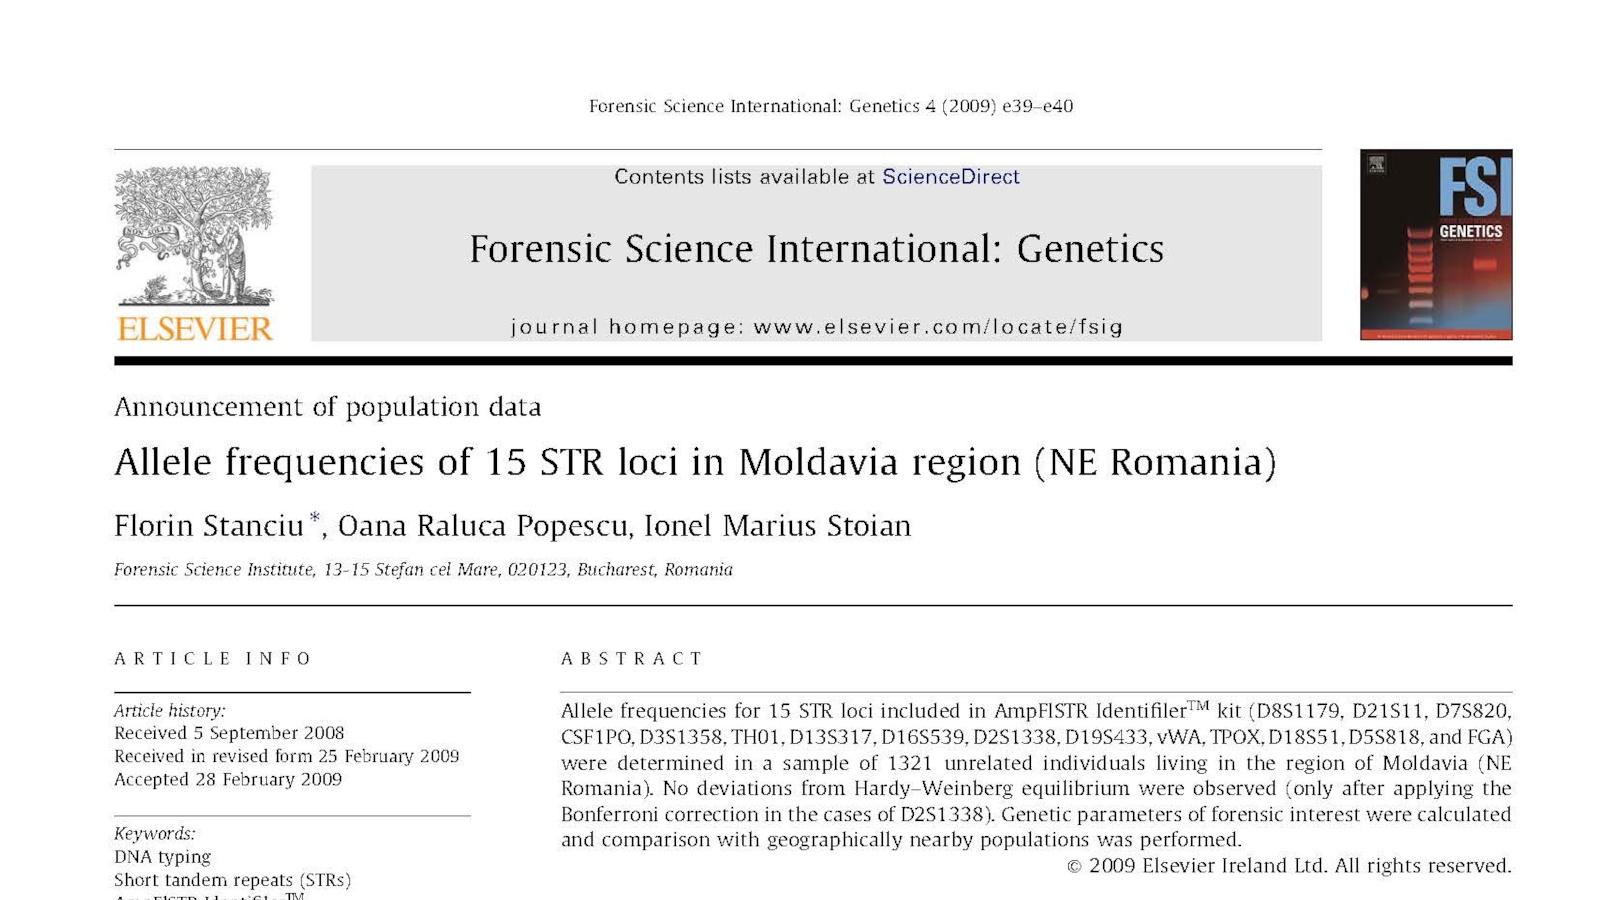 Allele frequencies of 15 STR loci in Moldavia region (NE Romania)